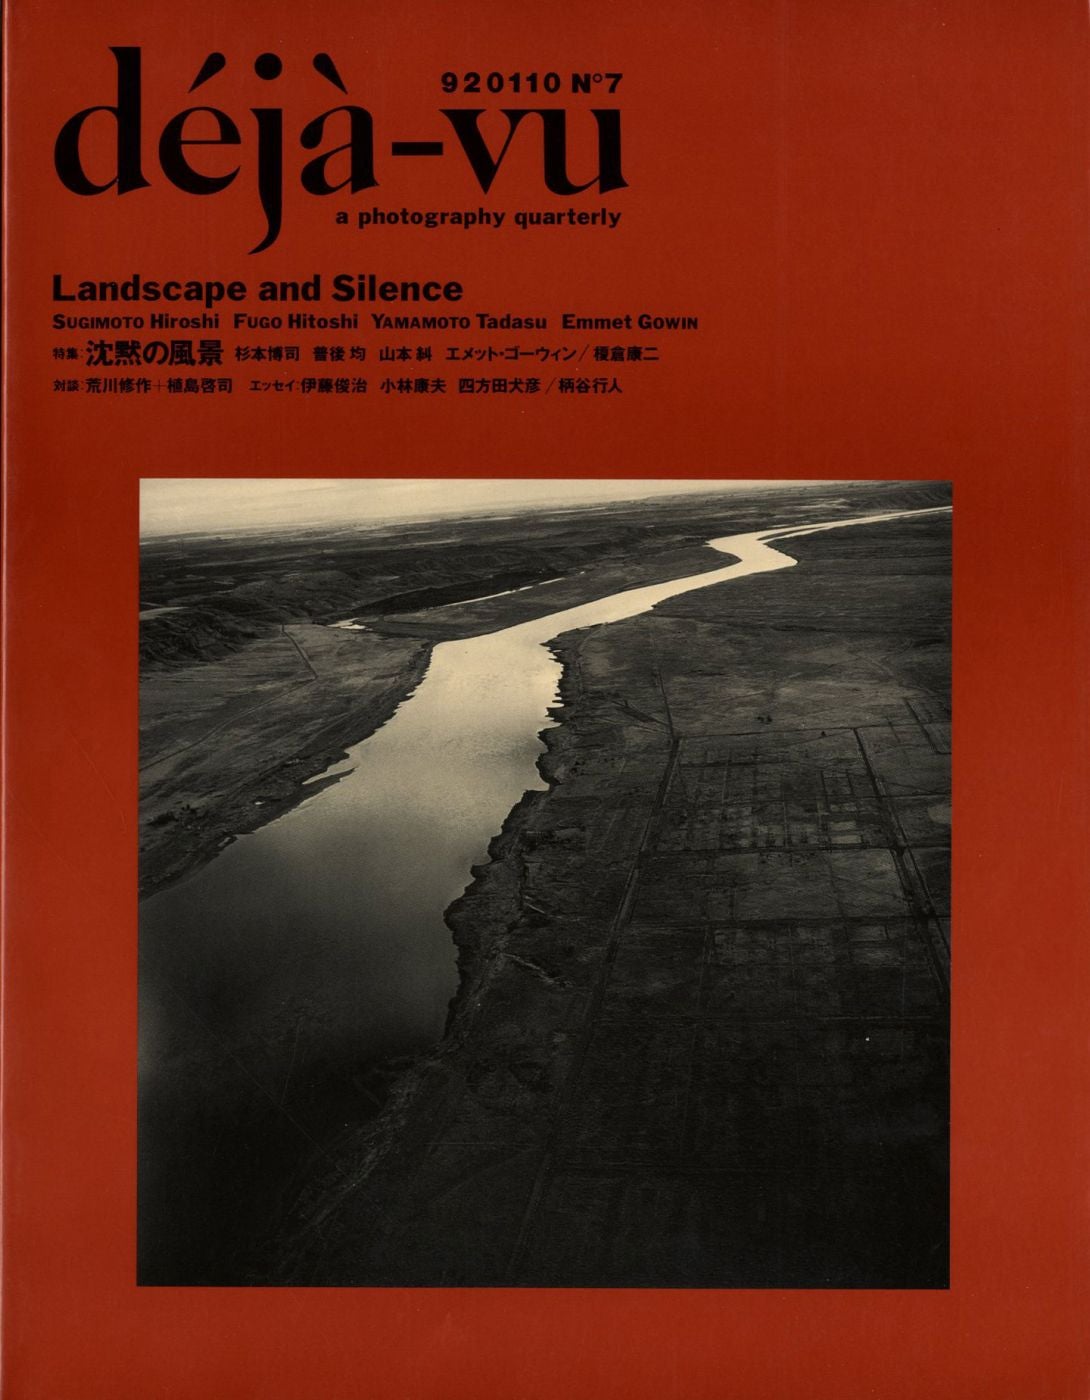 Déjà Vu No. 7: Landscape and Silence (a photography quarterly)